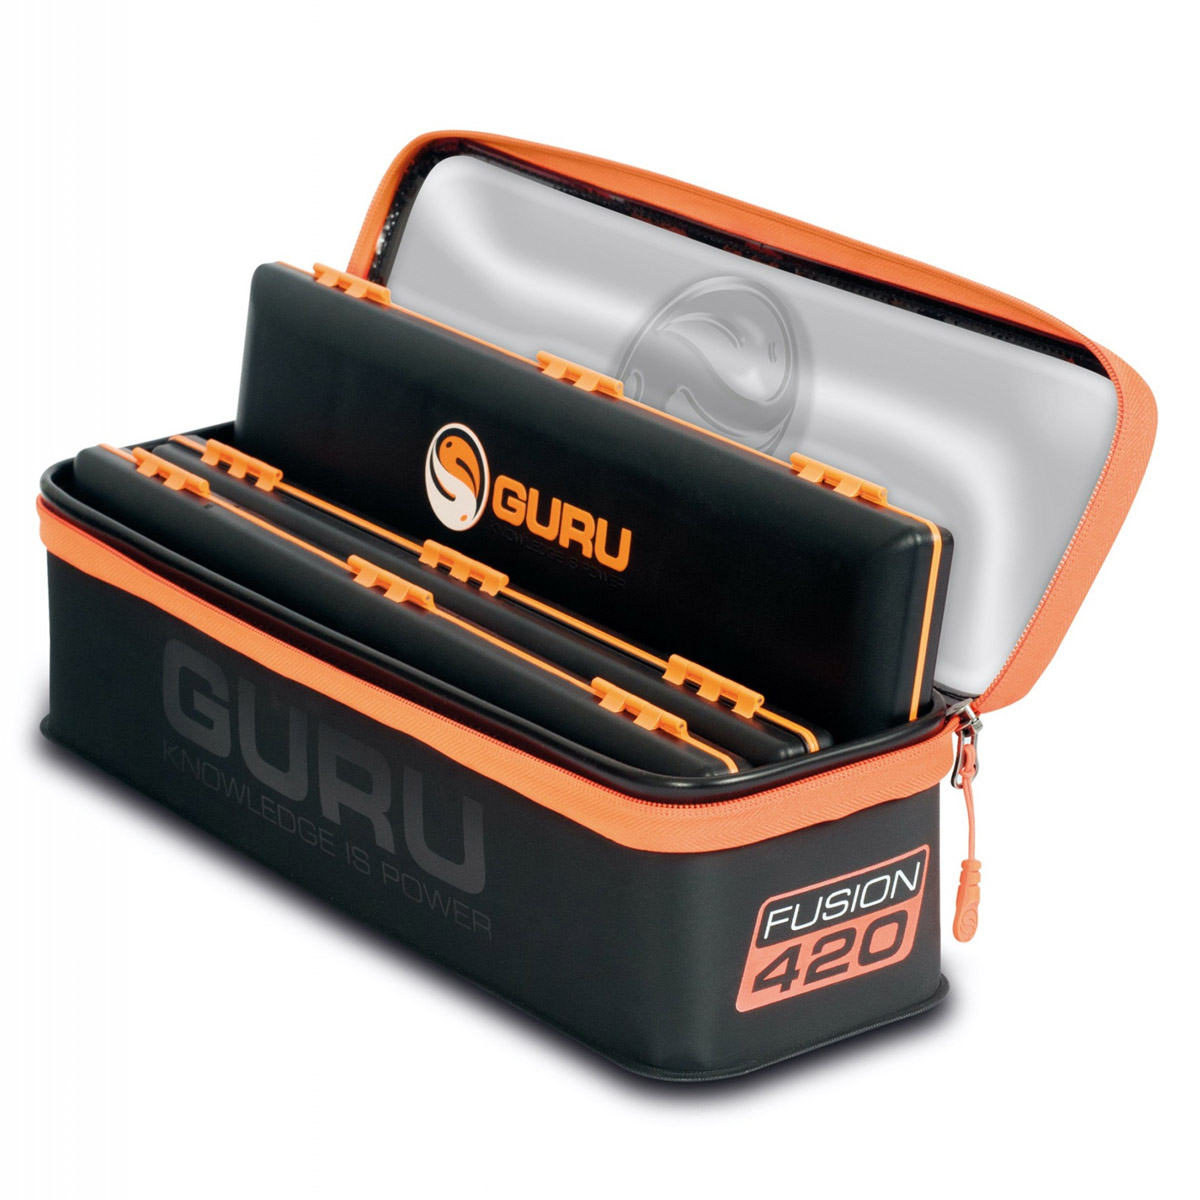 Guru Fusion 450 EVA Storage System